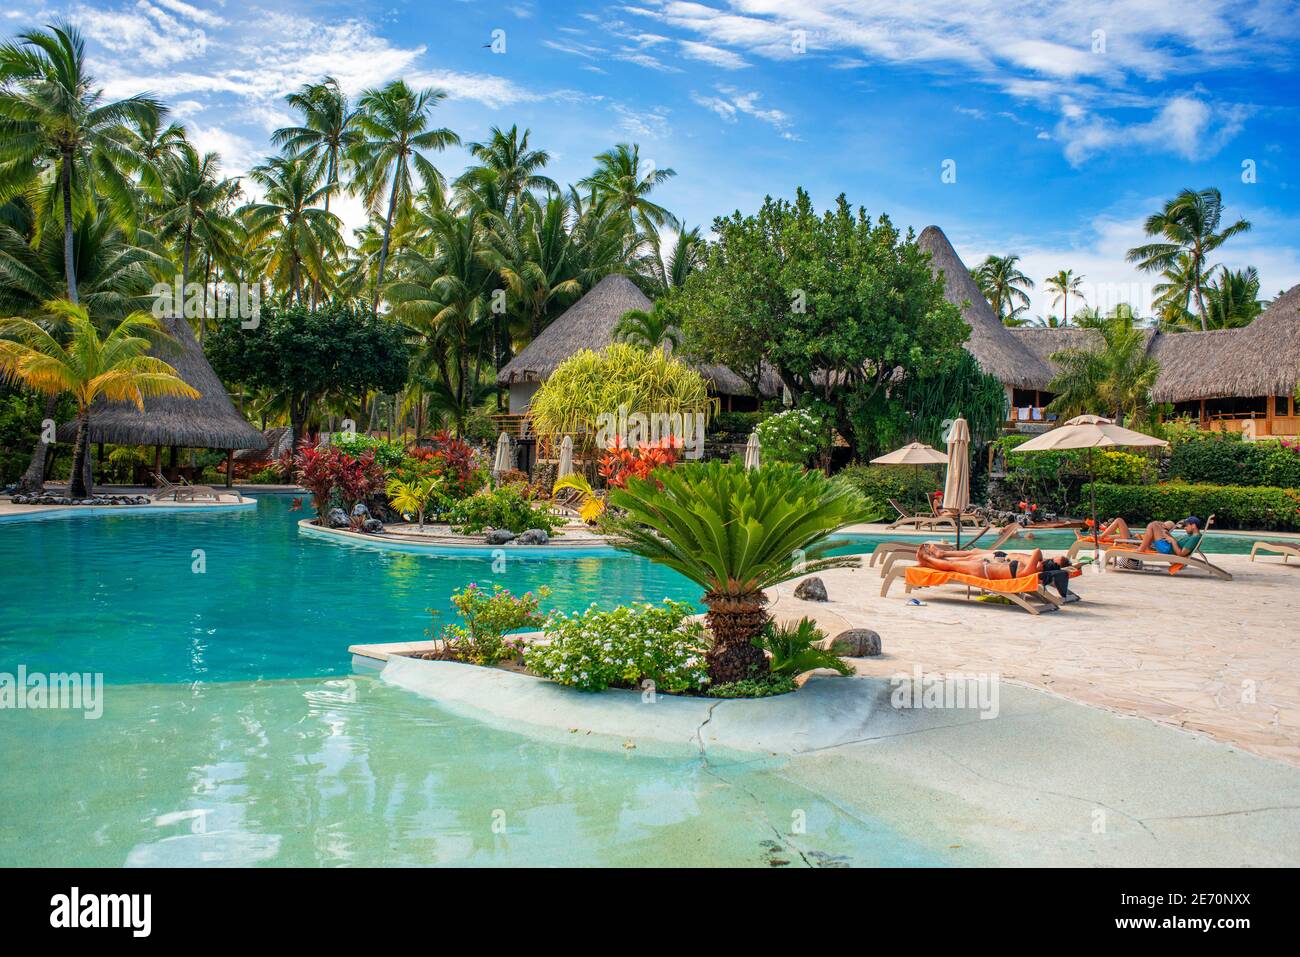 February 2020 - Pool of Le Bora Bora by Pearl Resorts luxury resort in motu  Tevairoa island, a little islet in the lagoon of Bora Bora, Society  Islands, French Polynesia, South Pacific. (